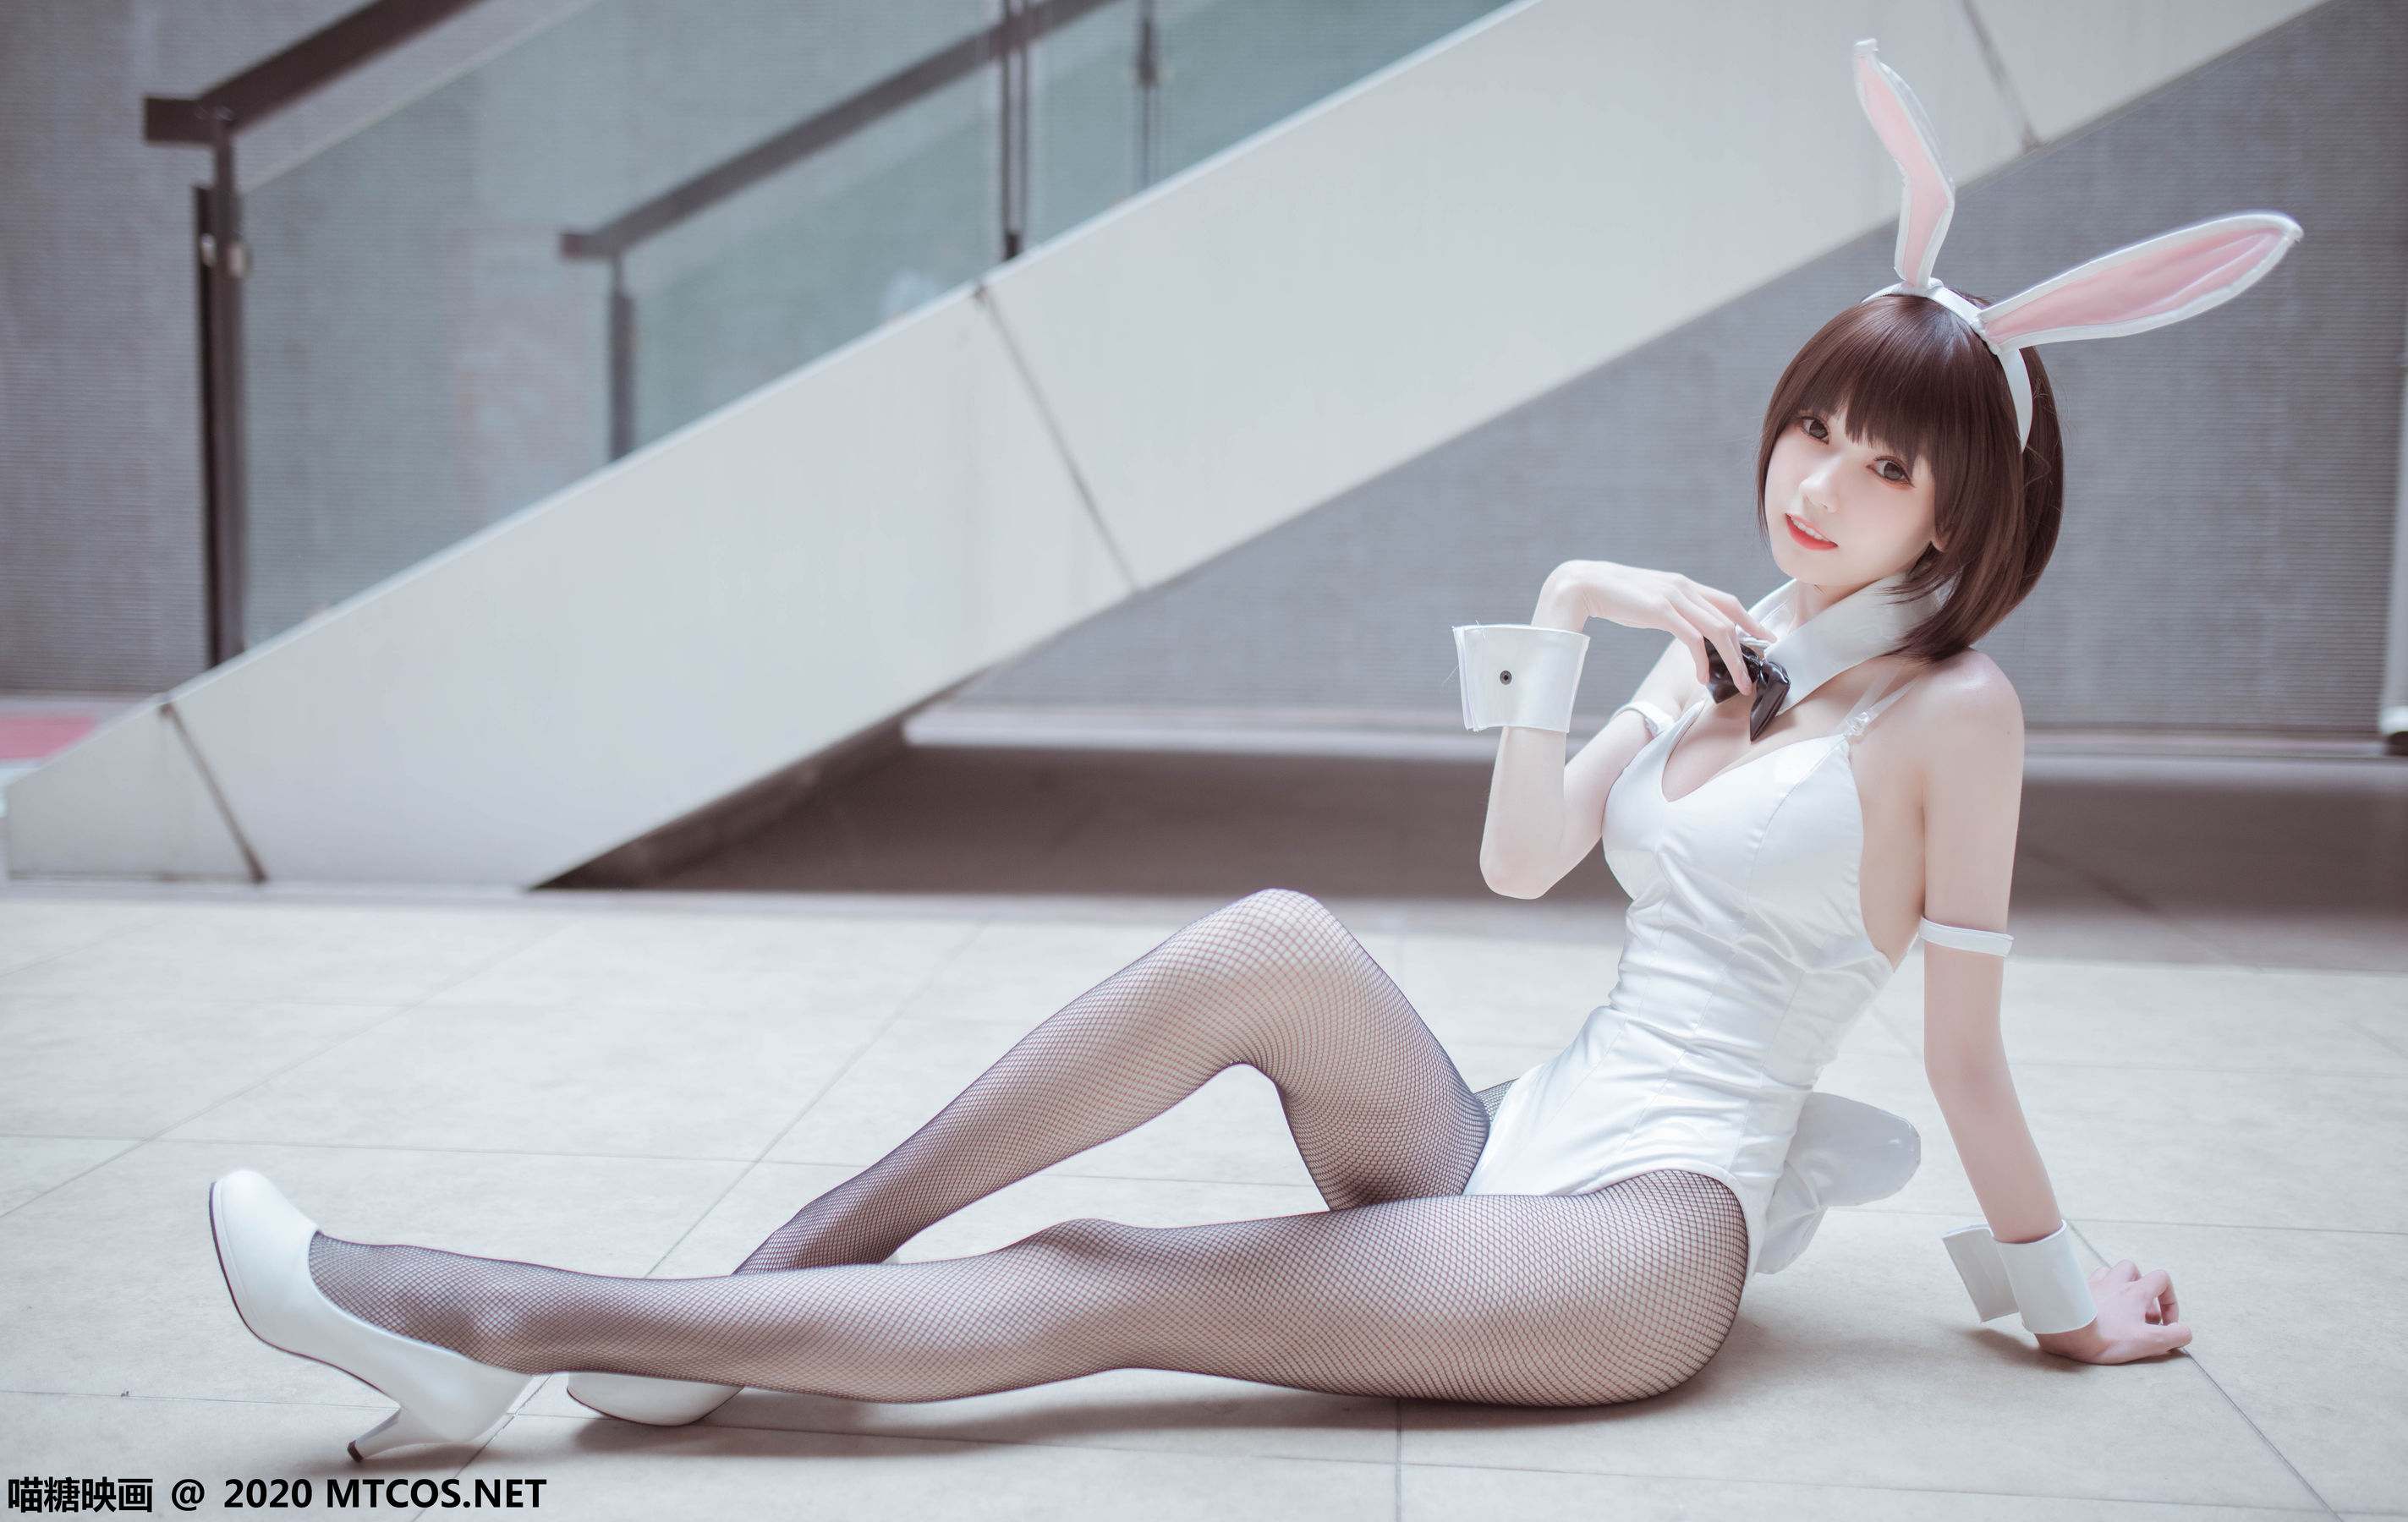 [糖] TML.017 “Saints Hui Rabbit Girl” photo set